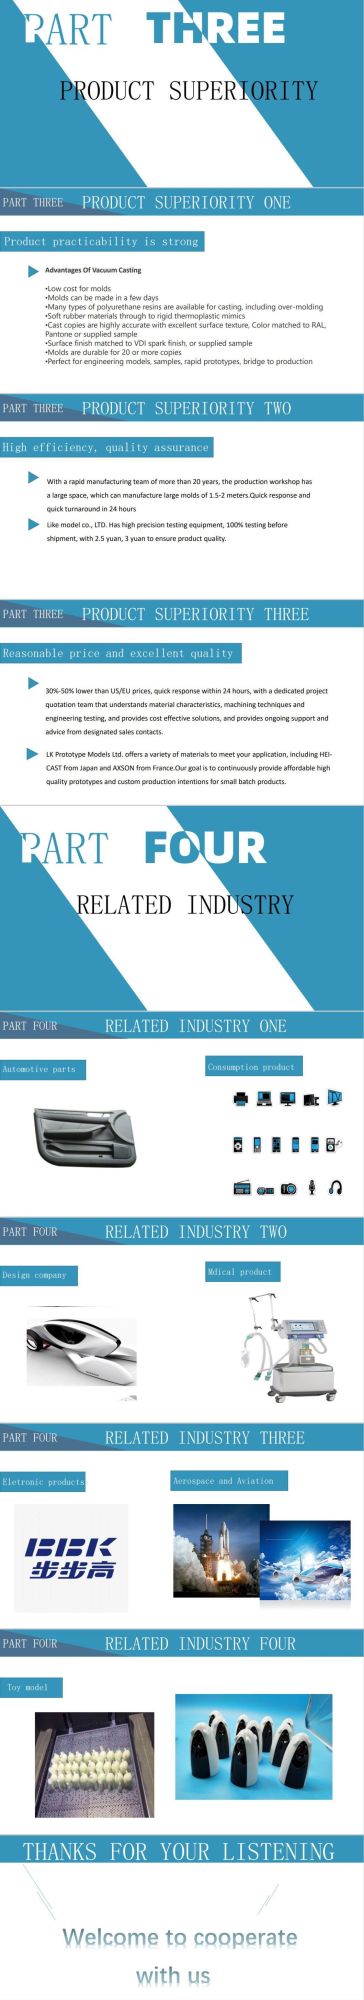 Customized CNC Machinery/Milling/Machining Aluminum Plate Machining Parts Manufacturer